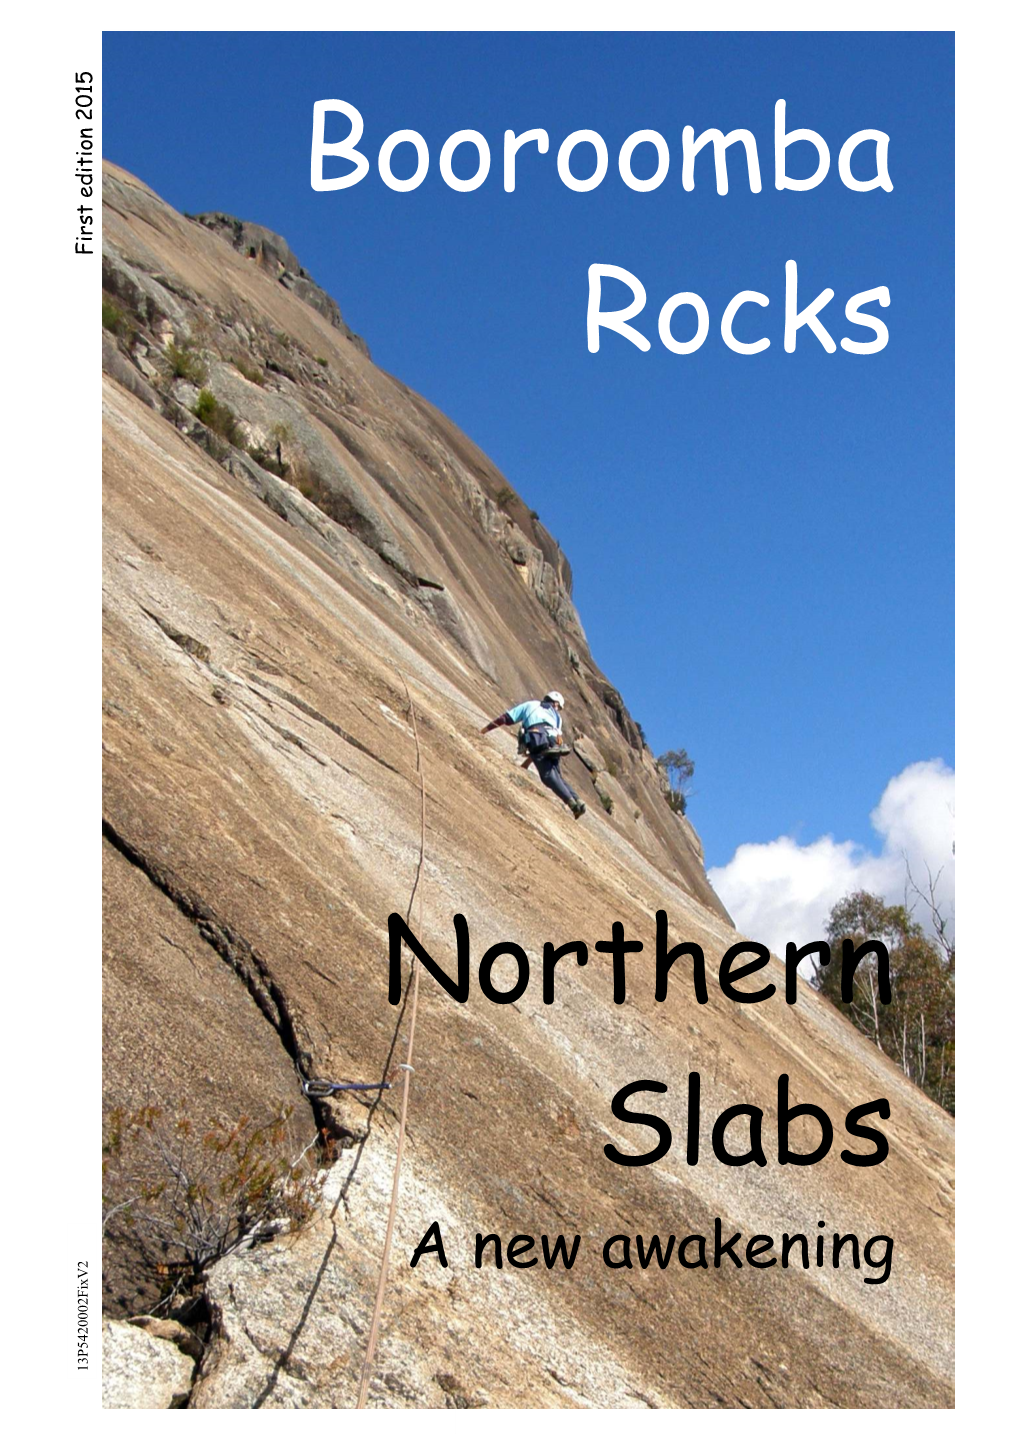 Booroomba Rocks Northern Slabs Guide